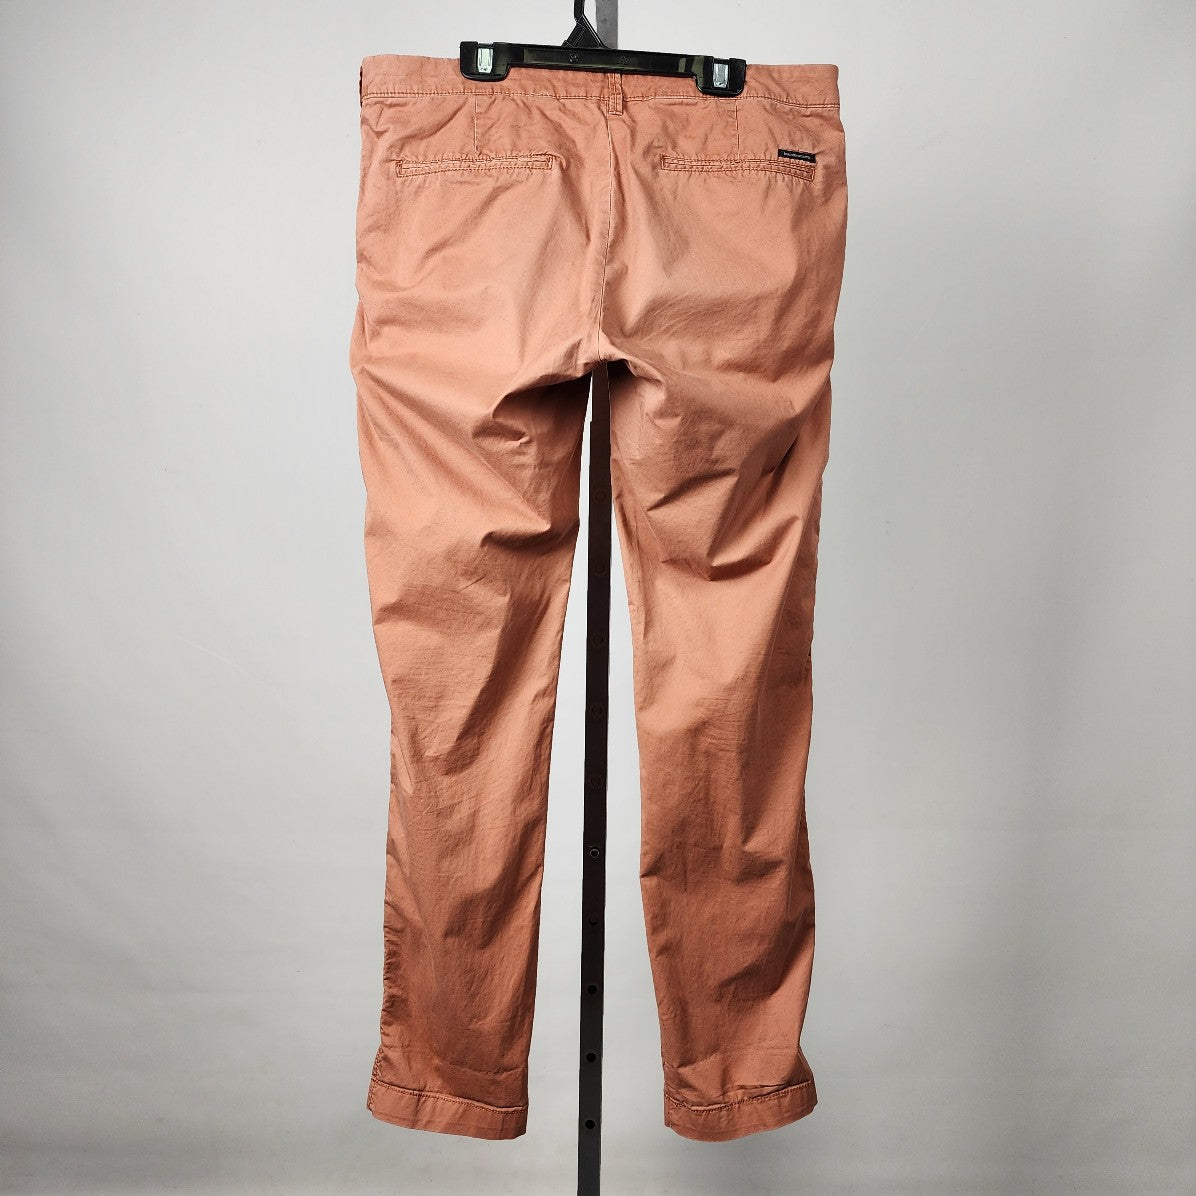 Maison Scotch Brown Cotton Blend Straight Leg Pants Size 31/32